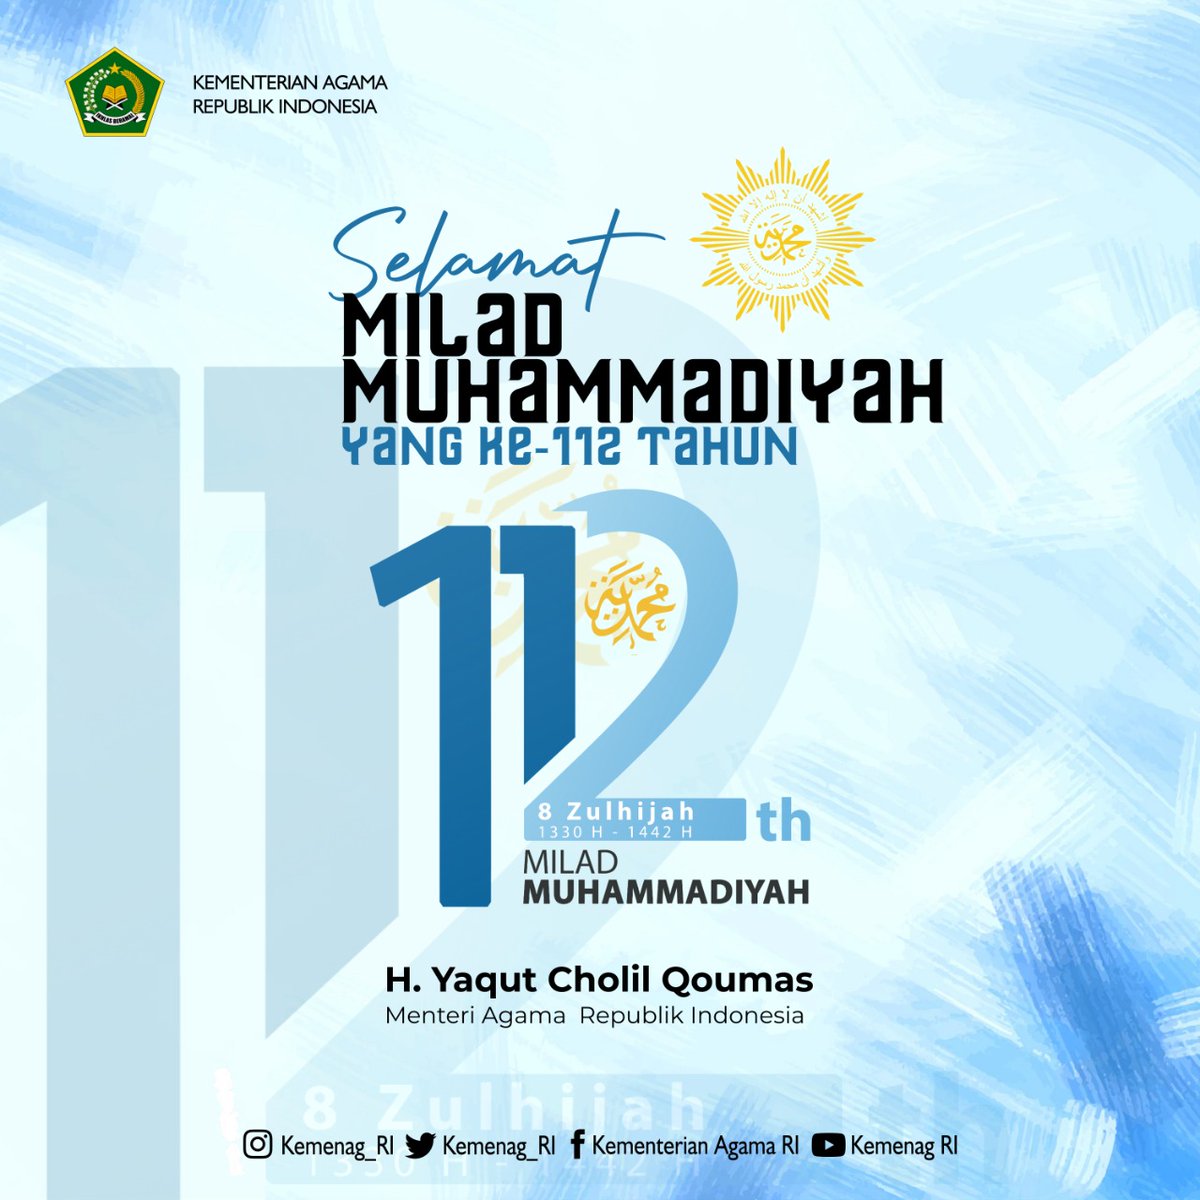 Muhammadiyah logo 112 milad ke Twibbon Ramaikan